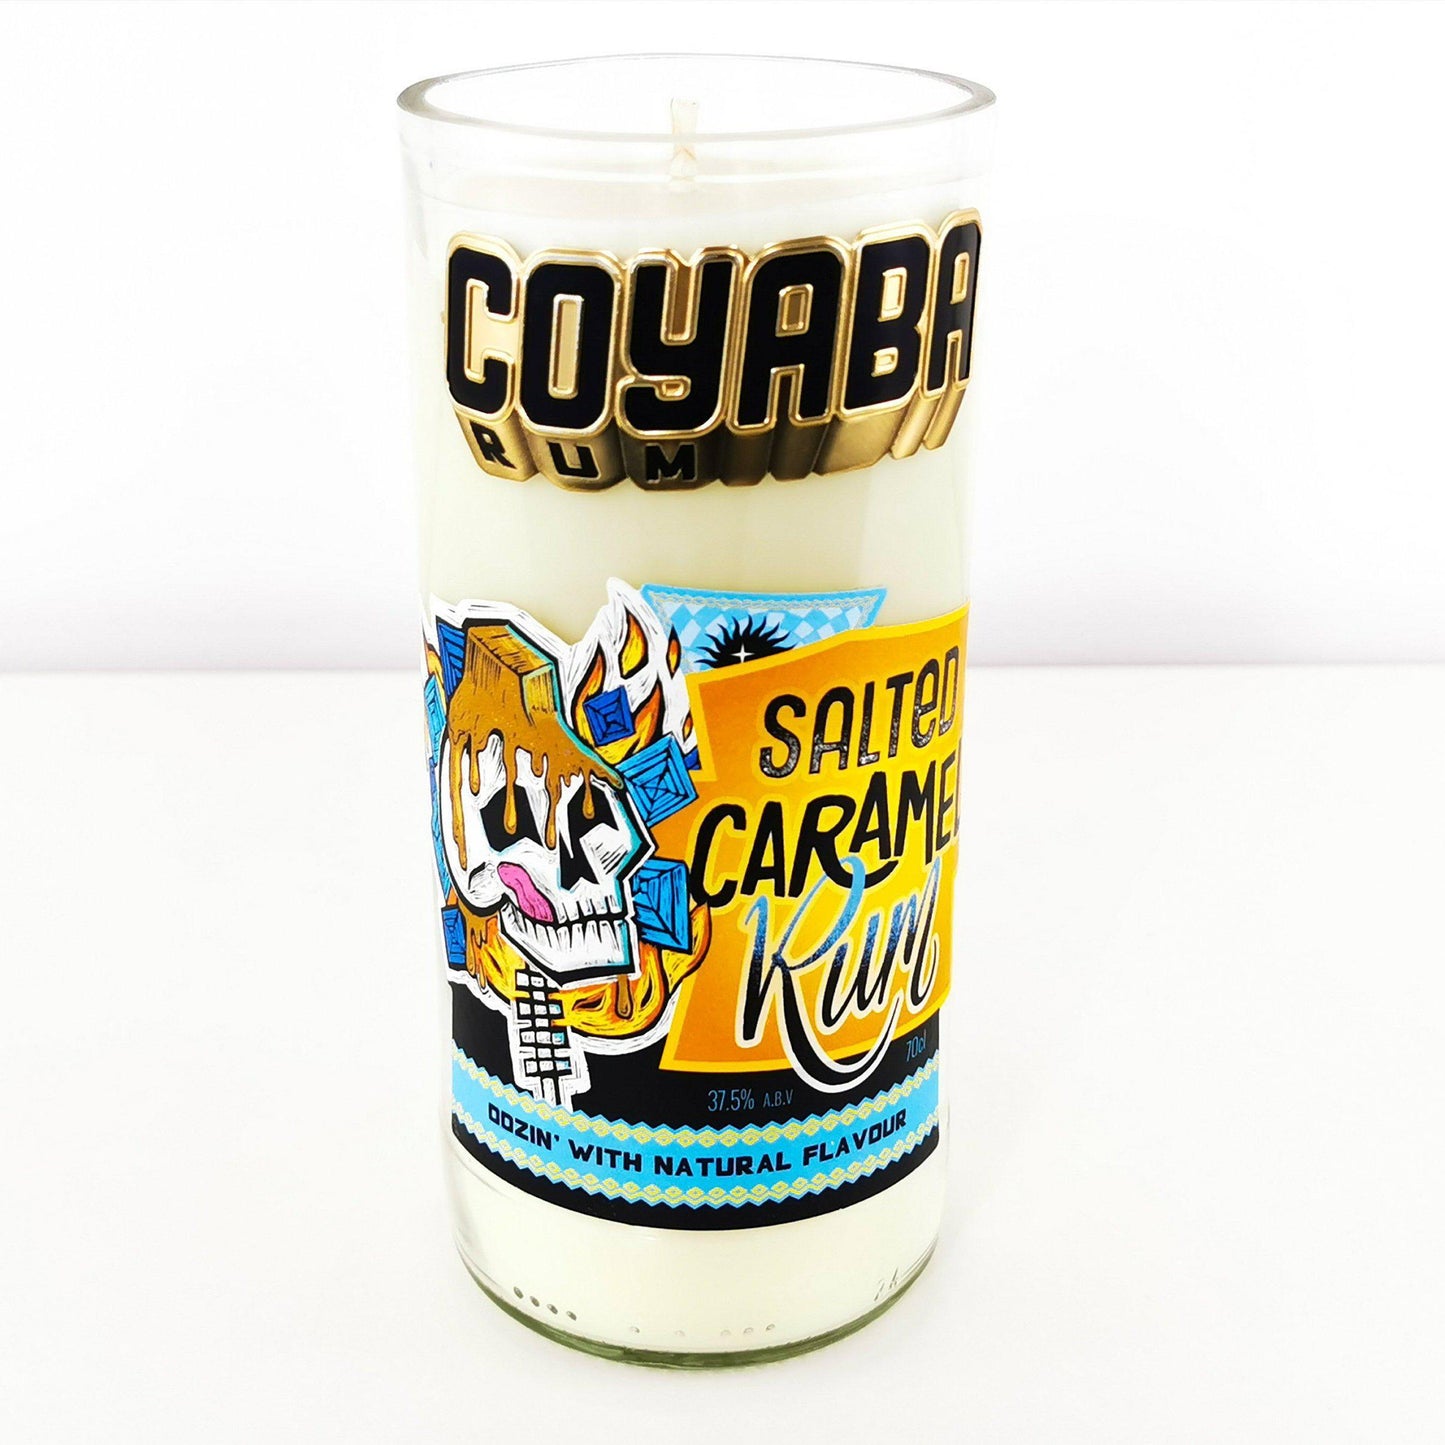 Coyaba Salted Caramel Rum Bottle Candle Rum Bottle Candles Adhock Homeware